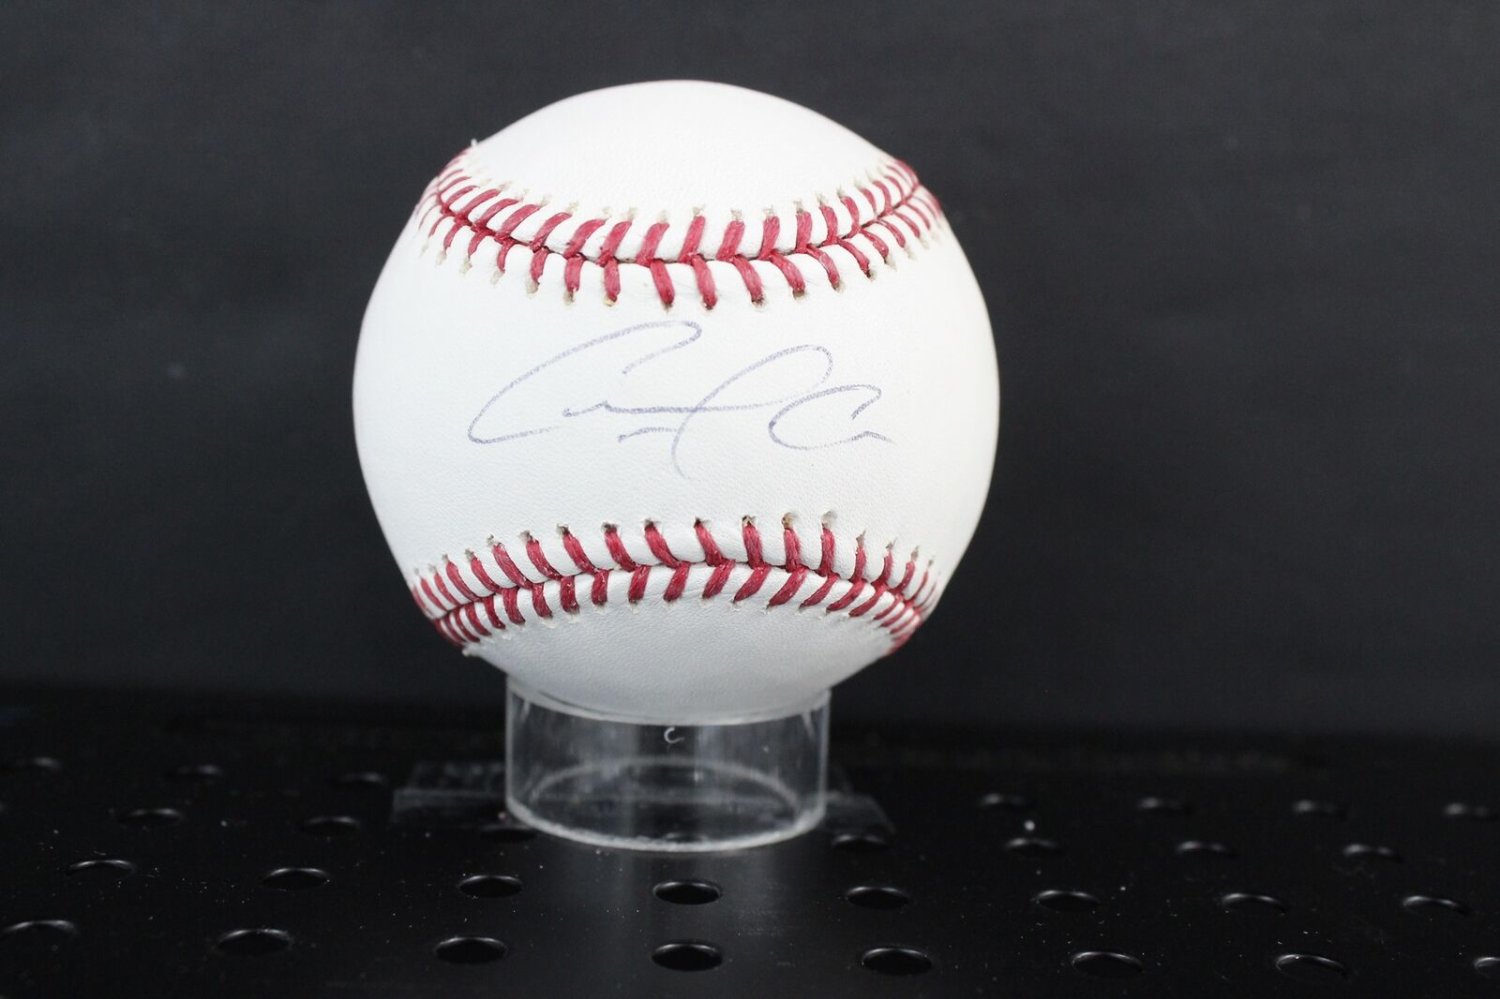 Carlos Correa Autographed Signed Baseball Autograph Auto PSA/DNA